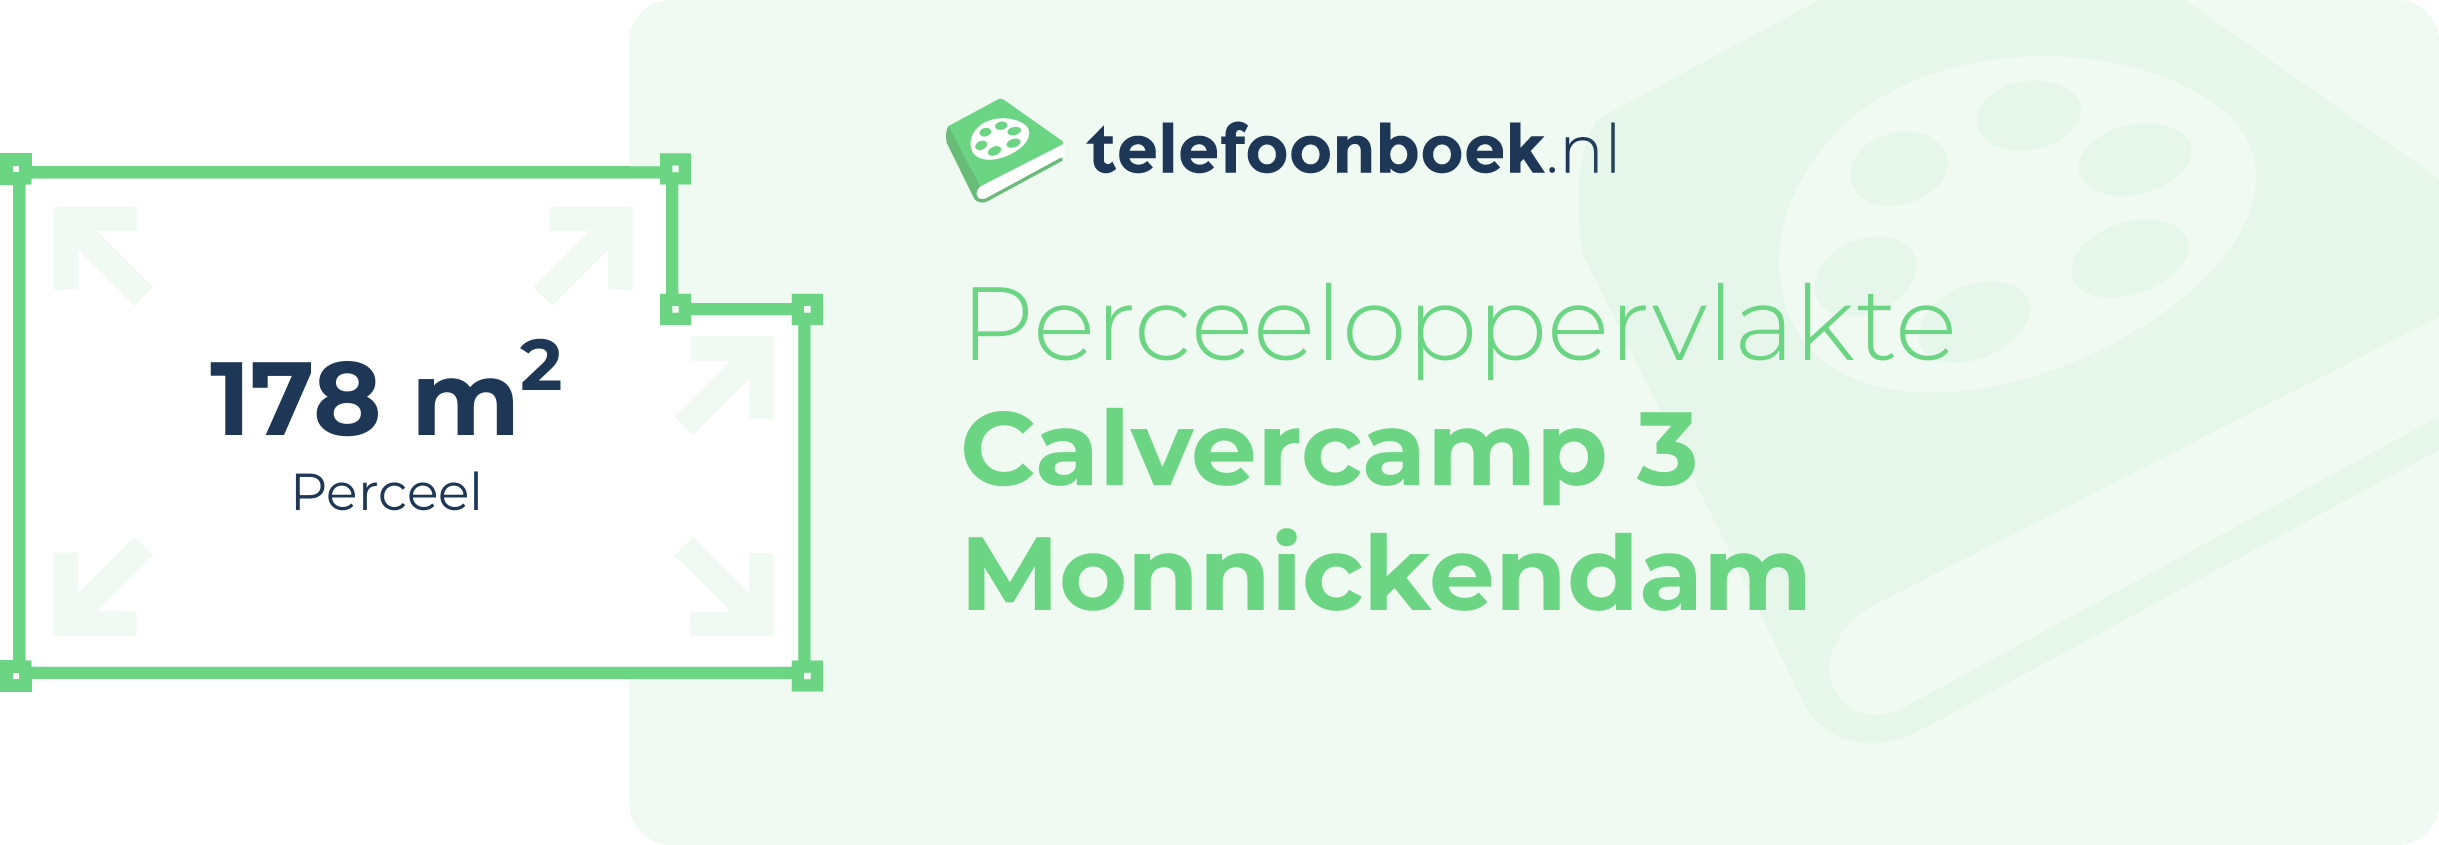 Perceeloppervlakte Calvercamp 3 Monnickendam